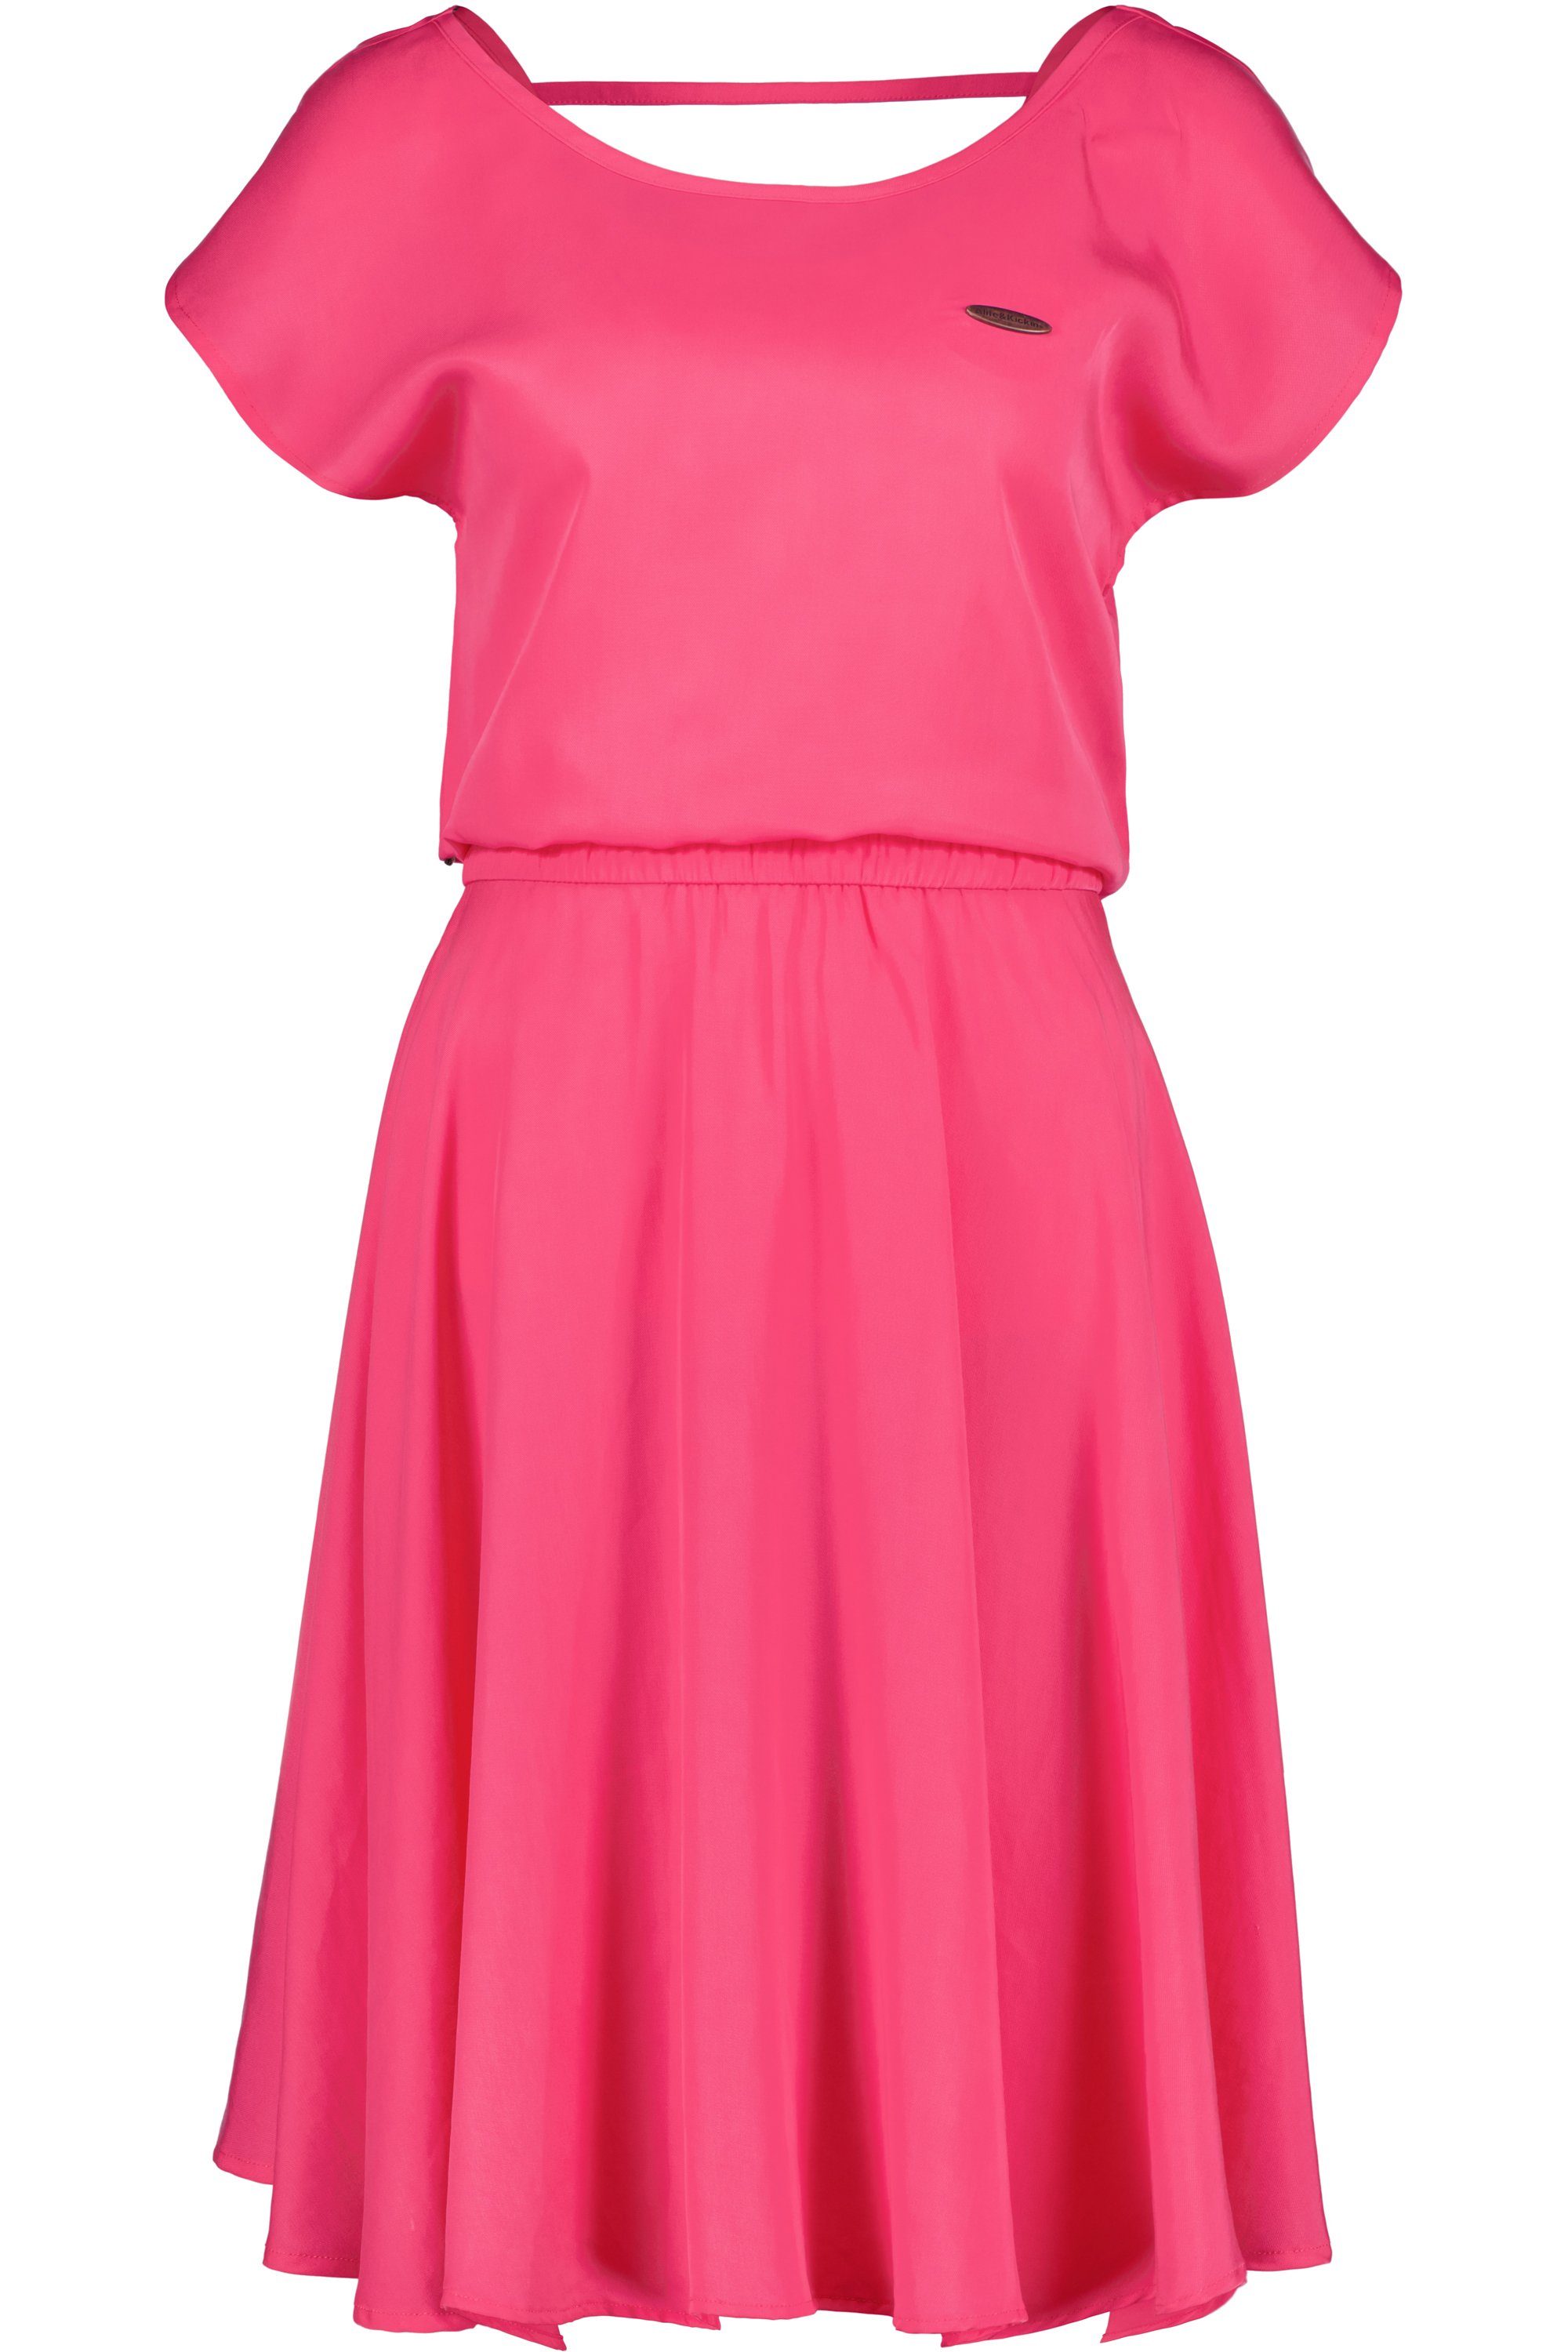 Alife & Damen IsabellaAK Kickin Kleid Sommerkleid, flamingo Dress Jerseykleid